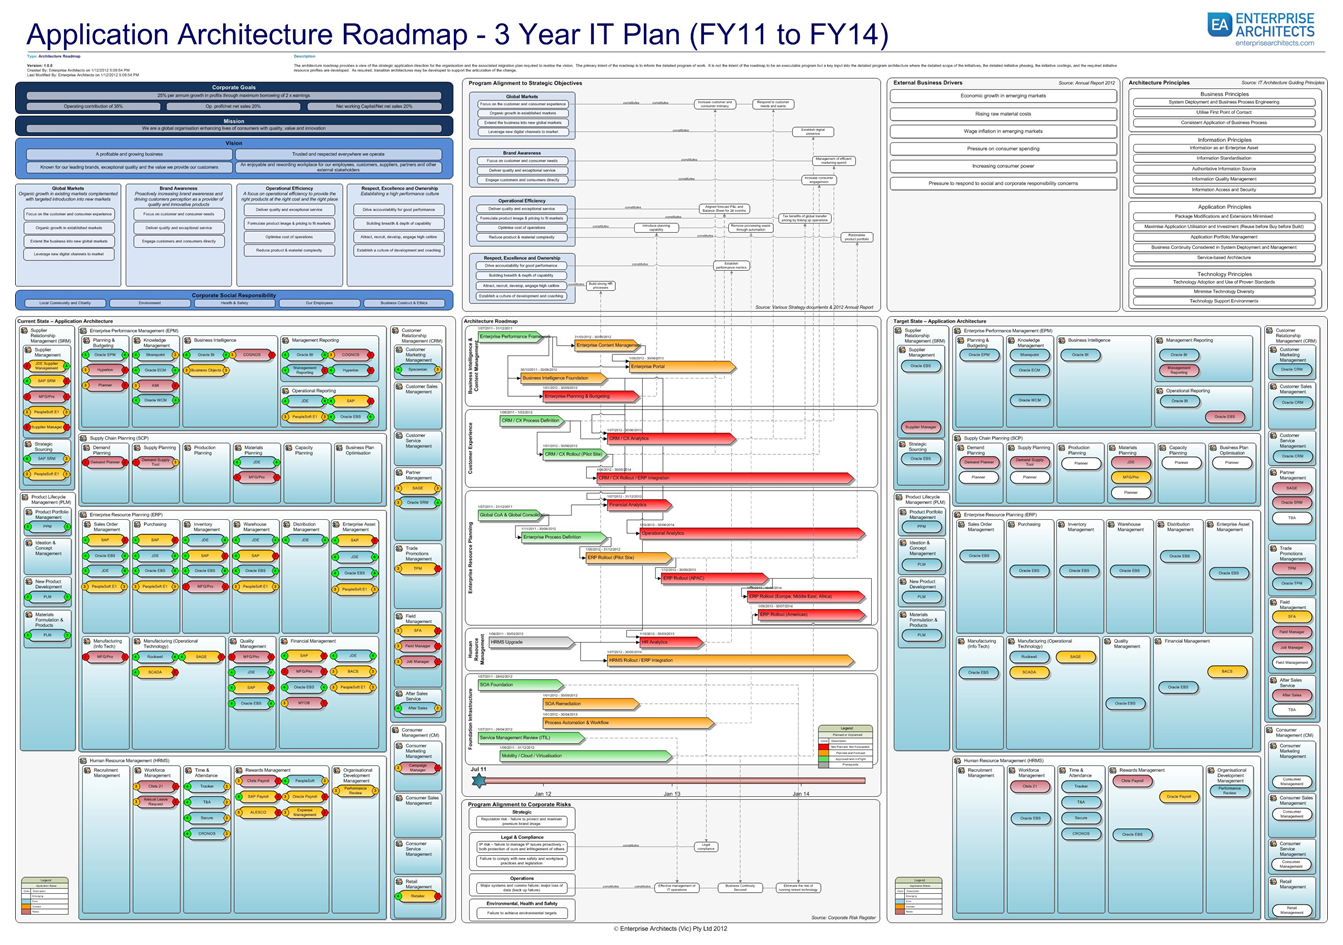 Application Architecfture Roadmap example